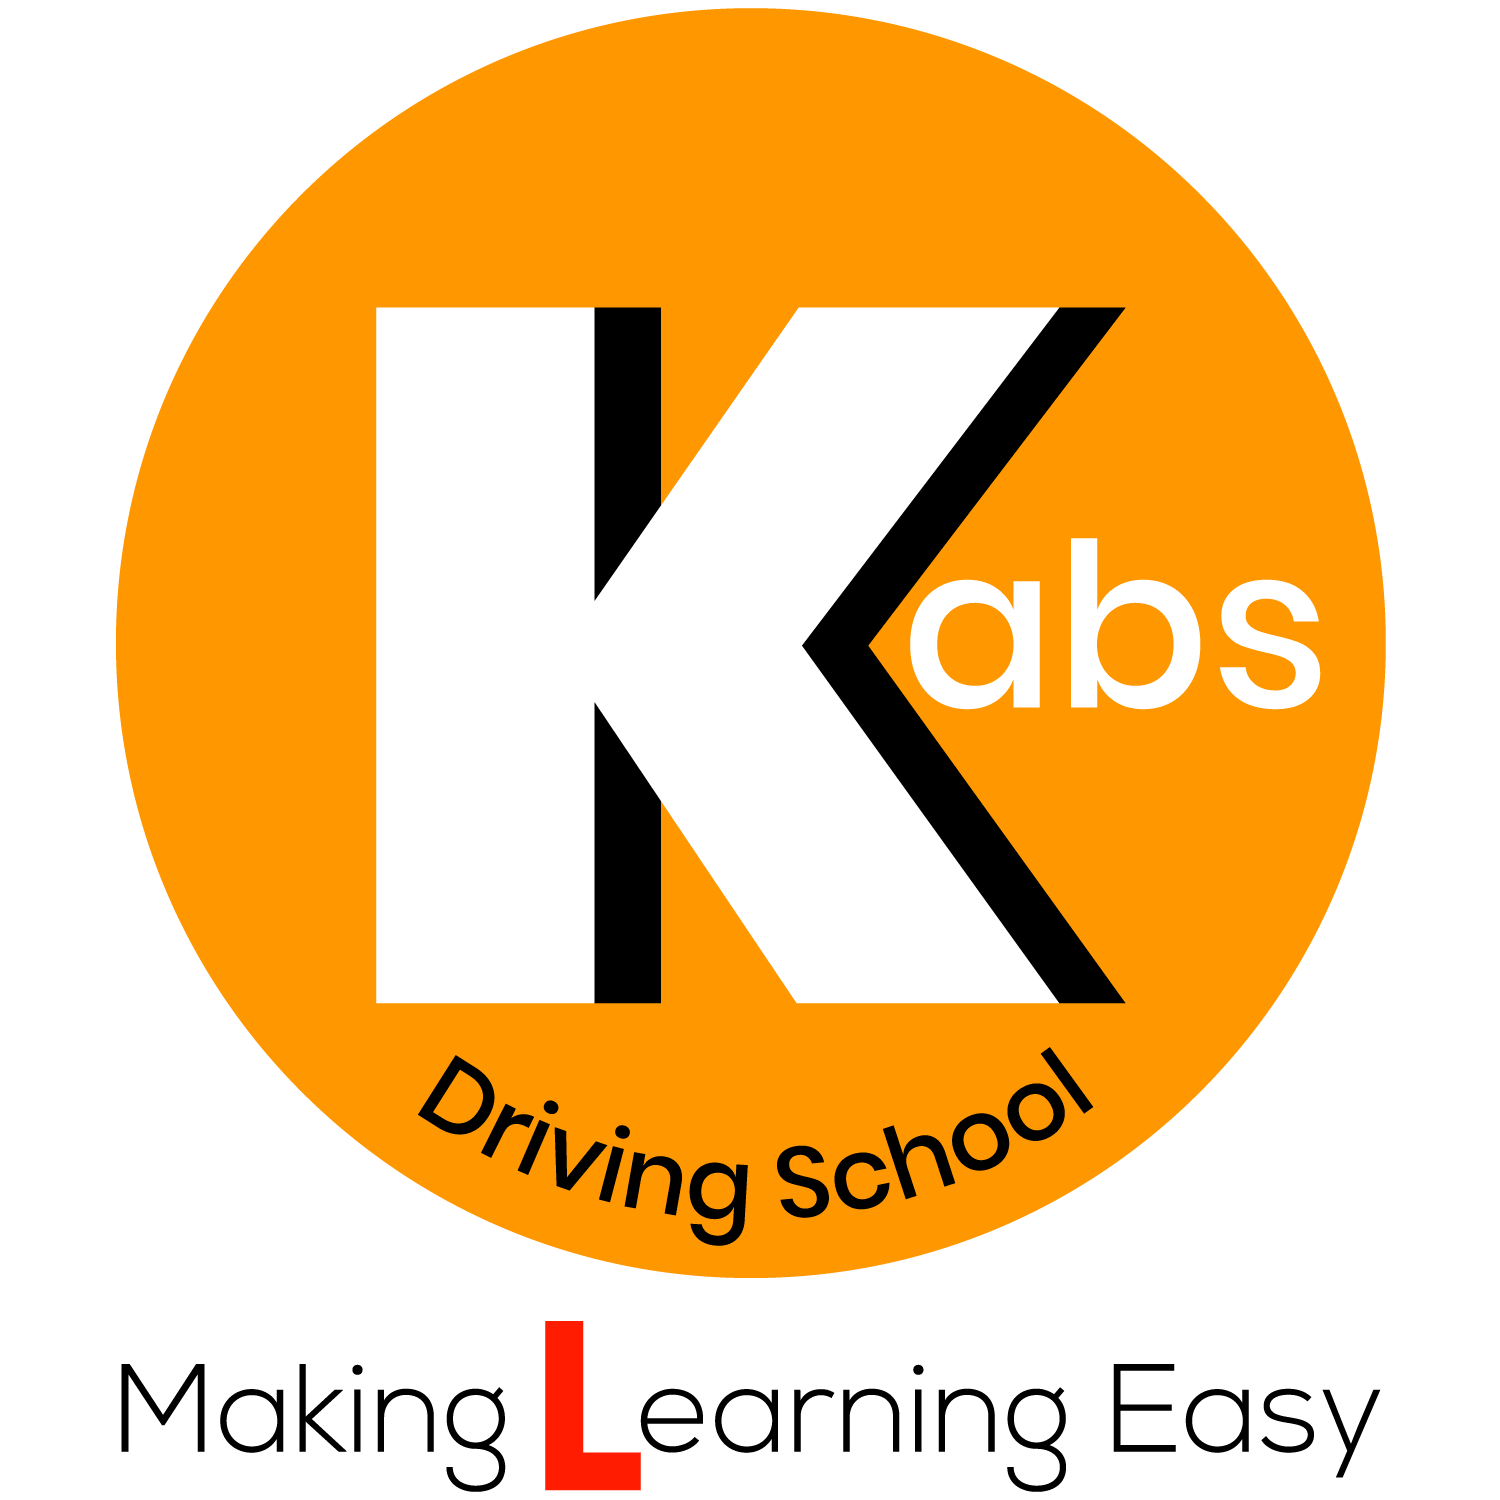 kabs driving school logo